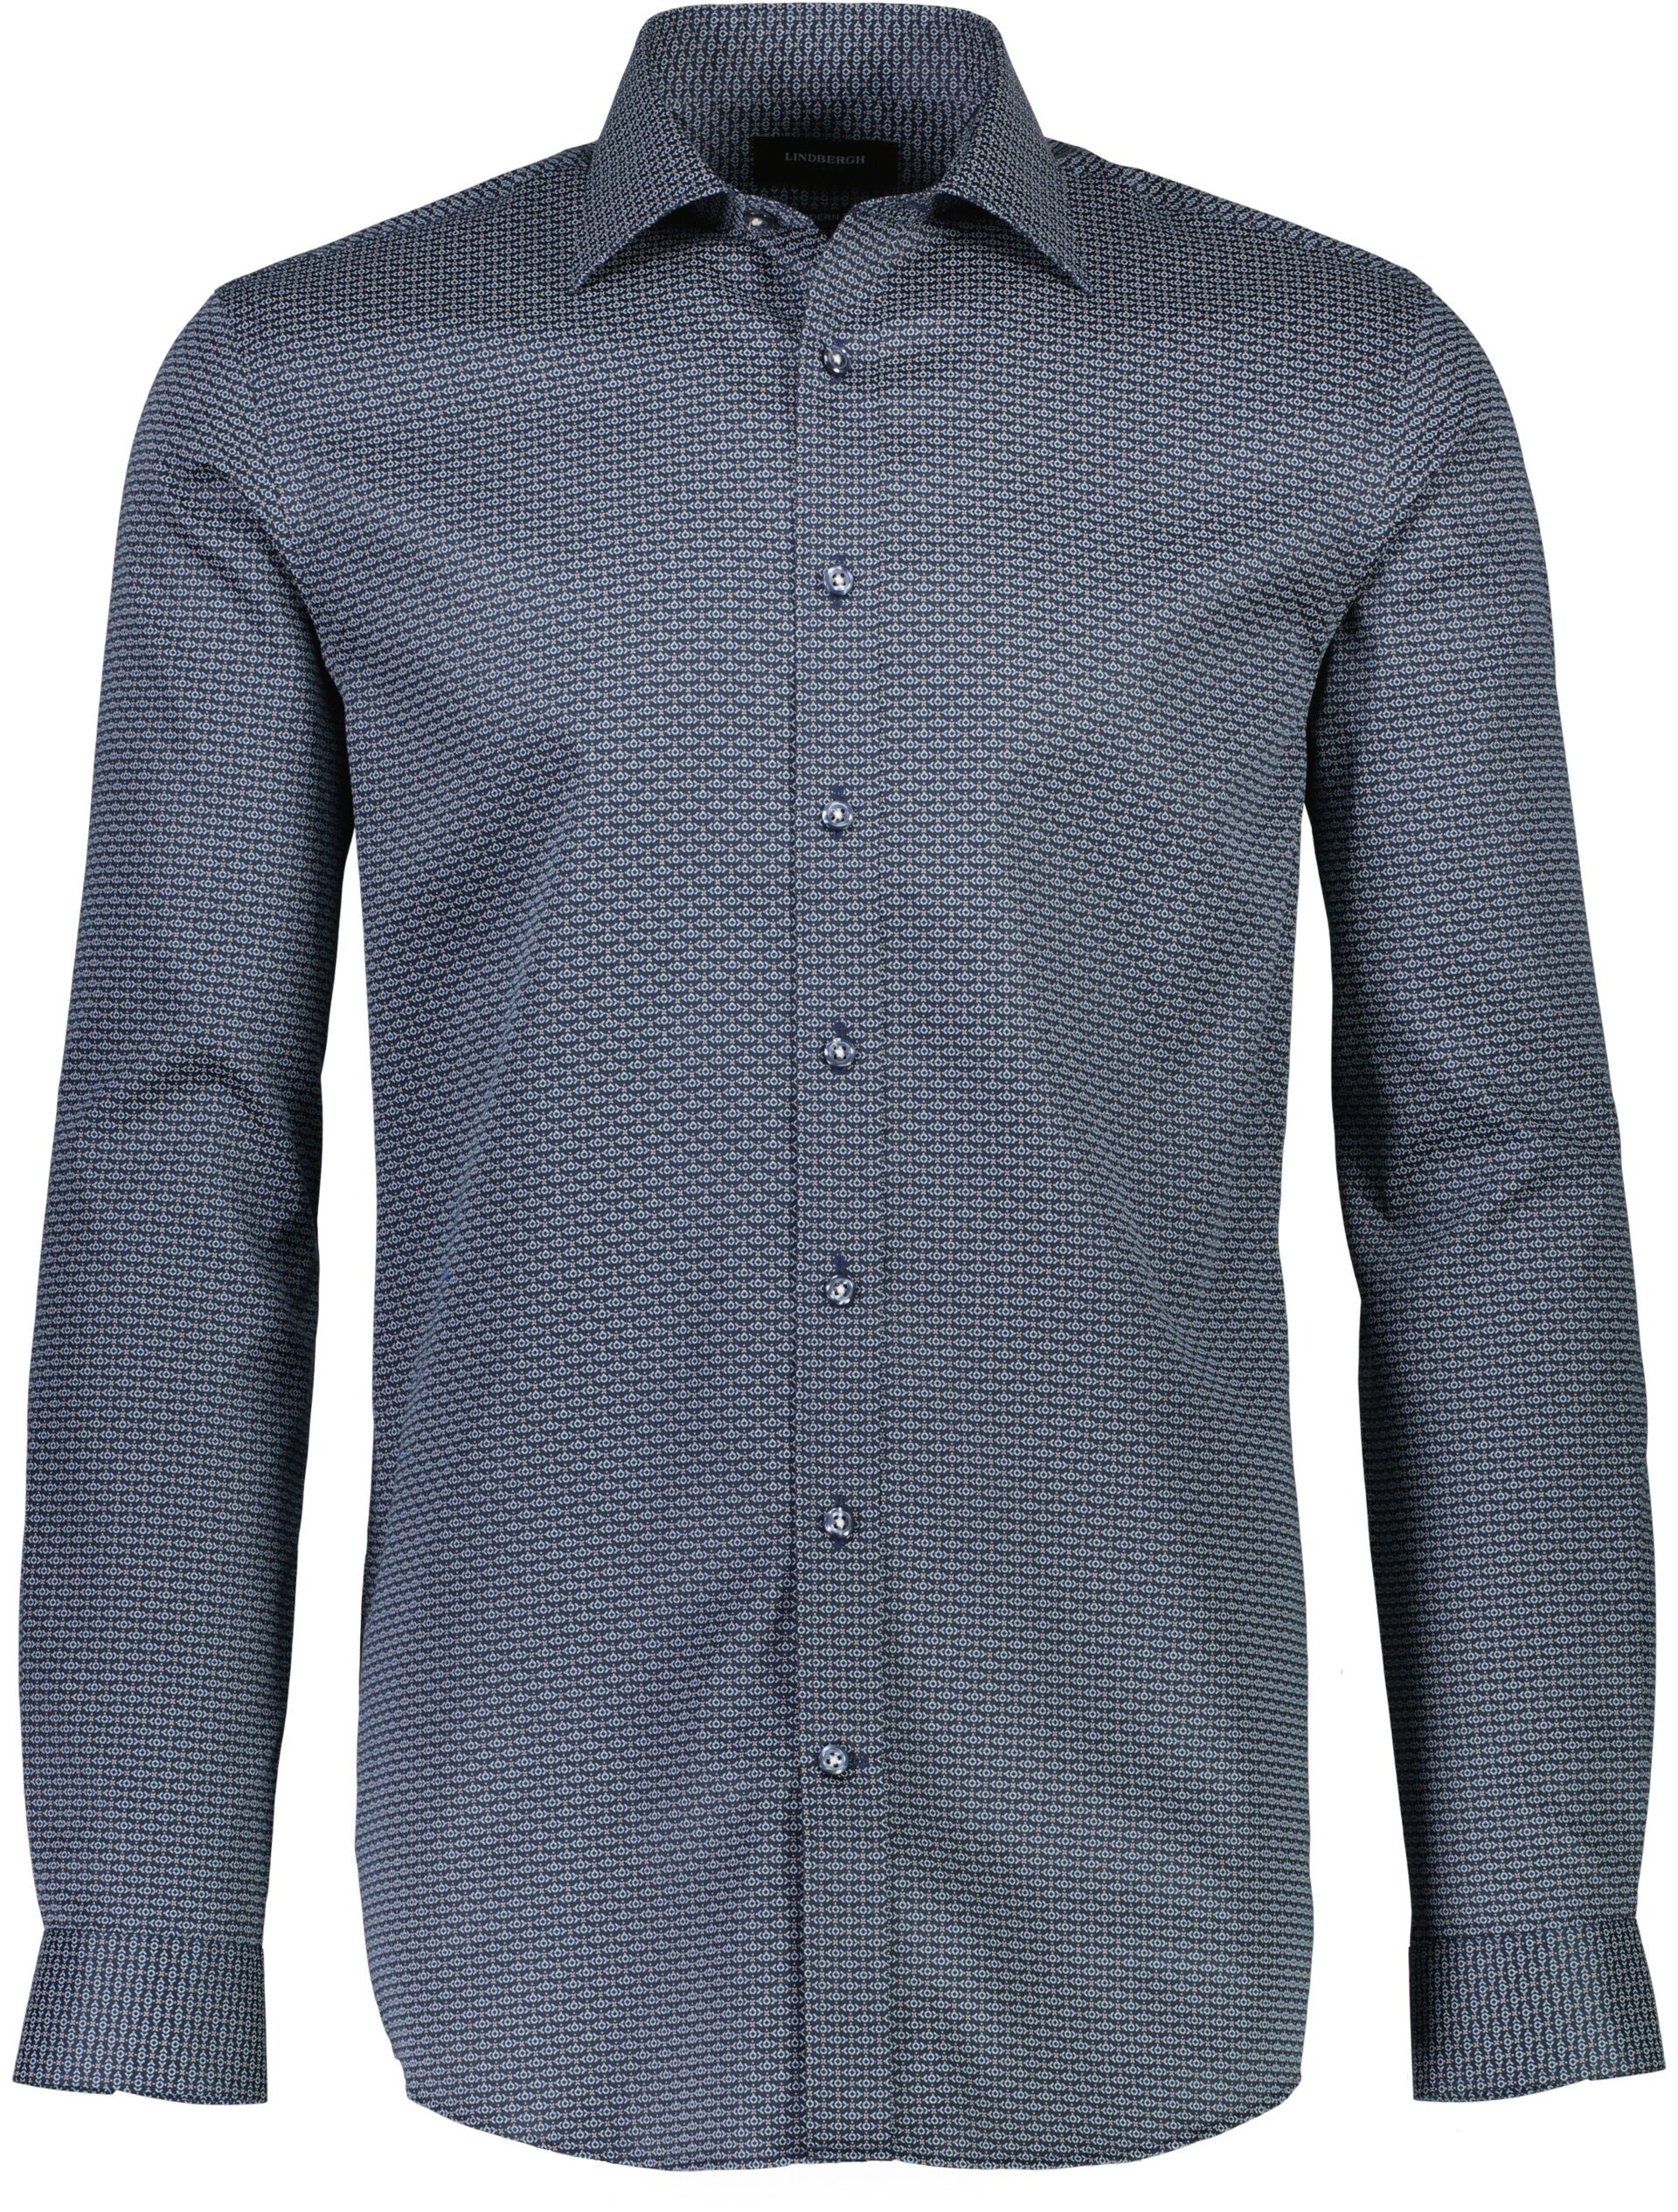 Business casual shirt 30-242194